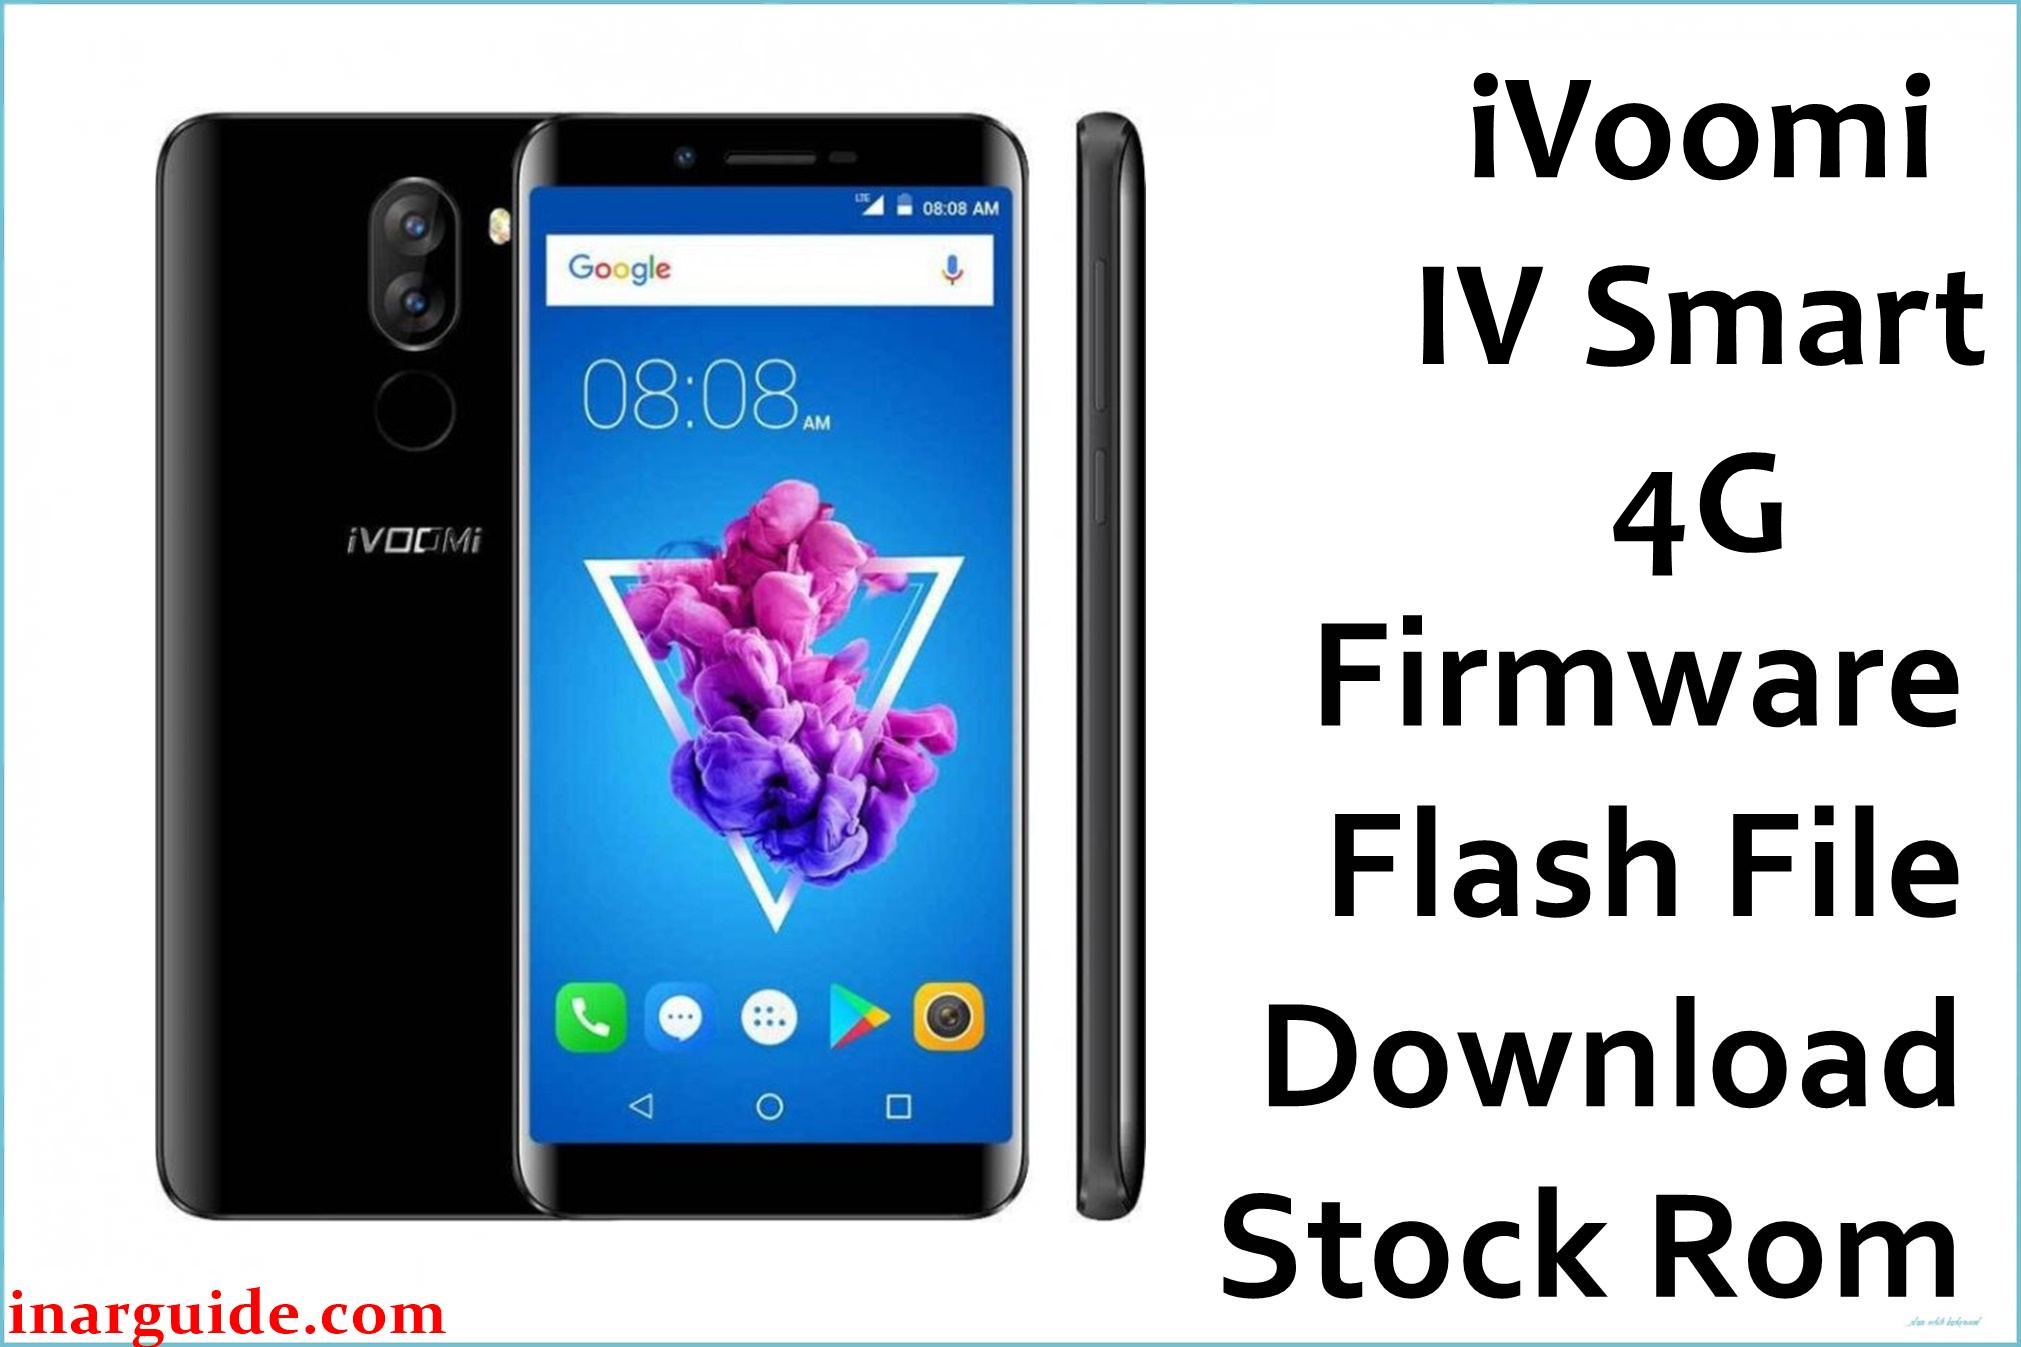 iVoomi IV Smart 4G